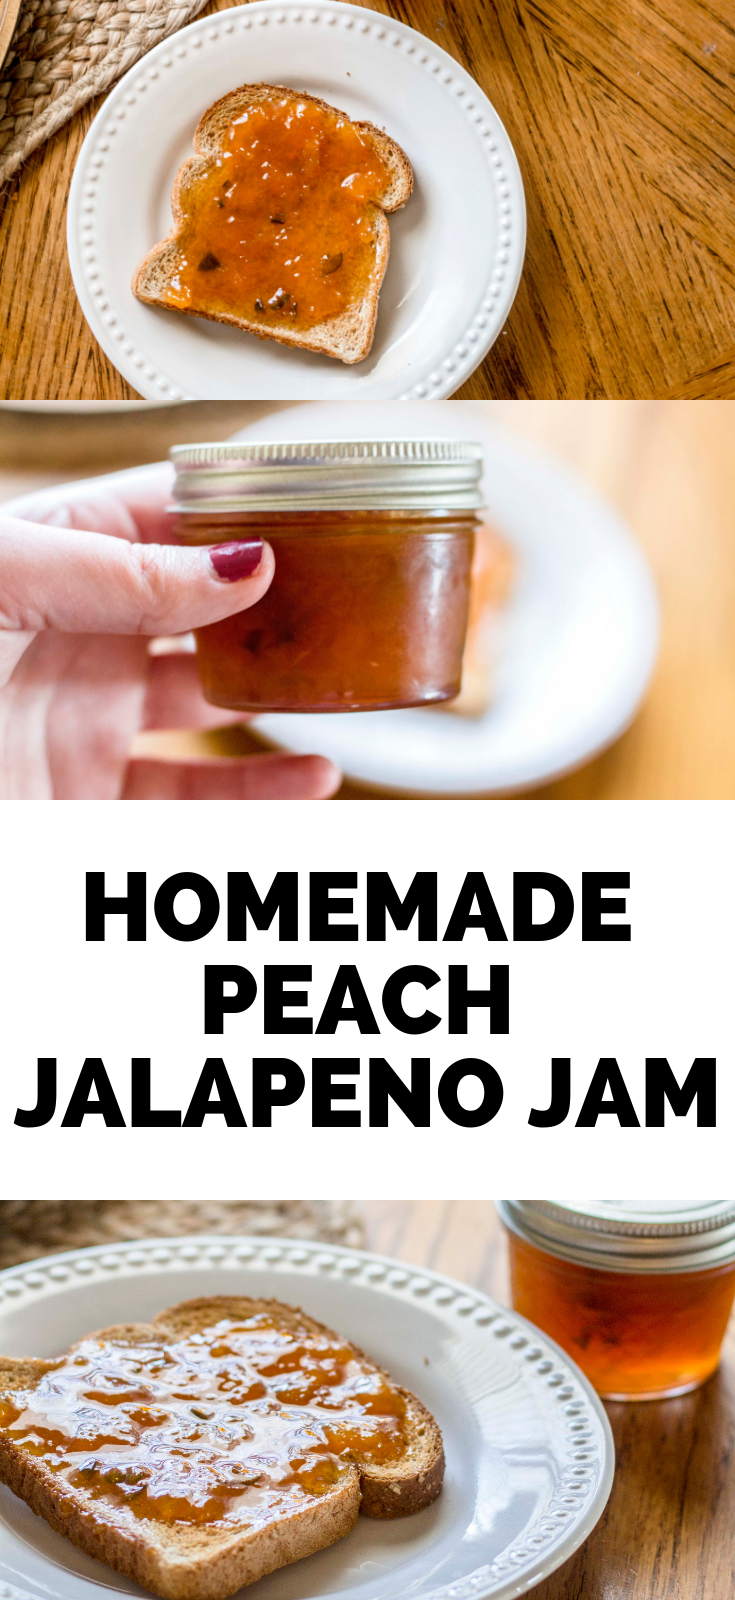 Homemade jalapeno peach jam